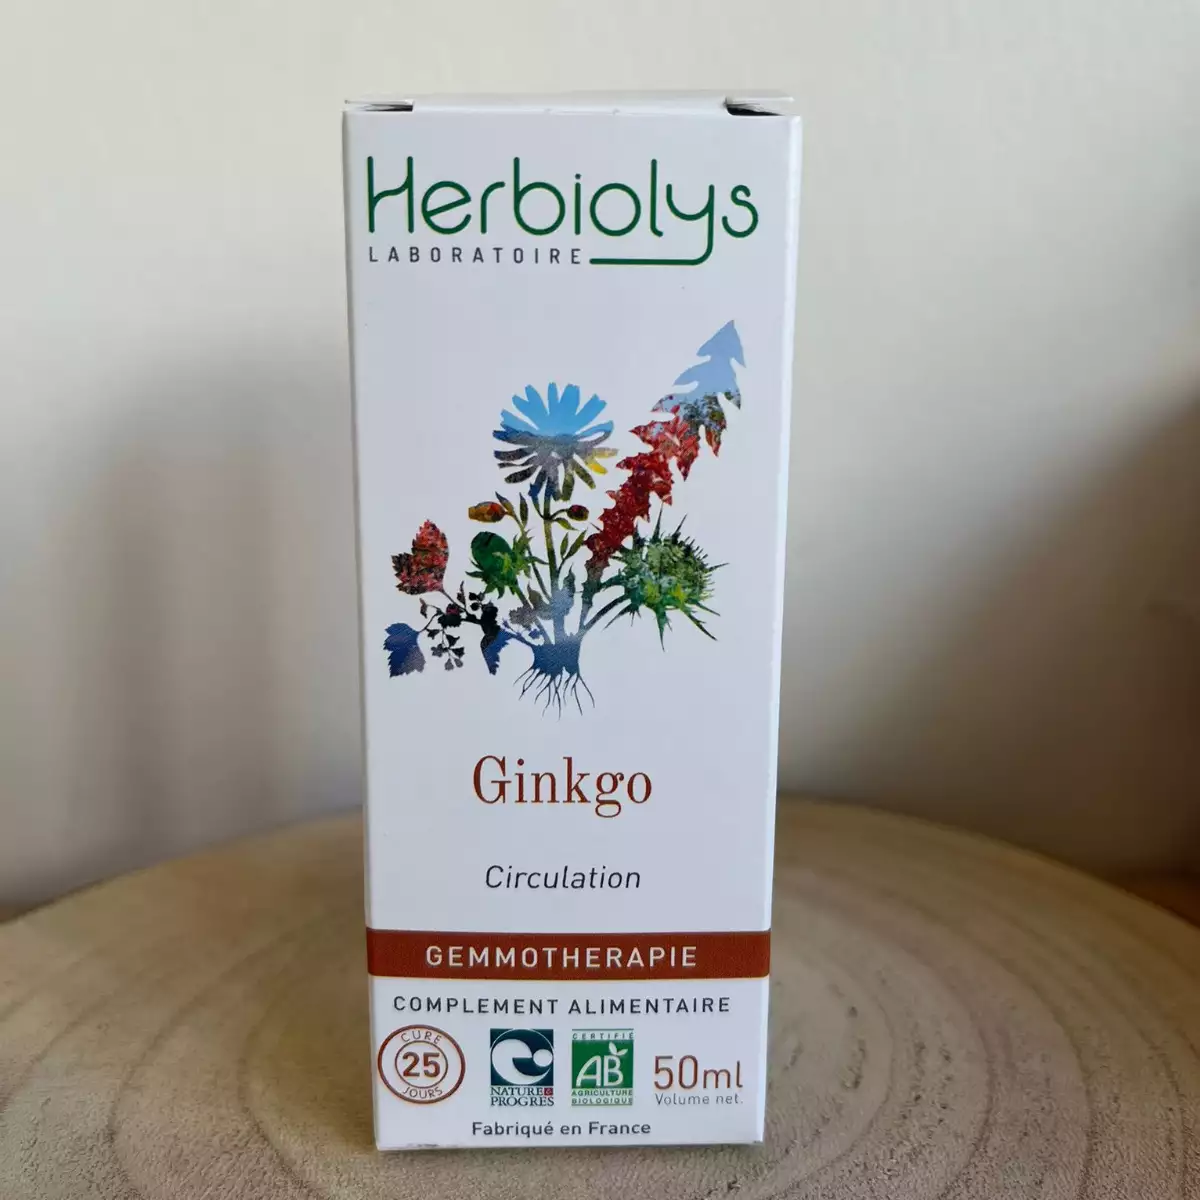 Ginkgo - Herbiolys